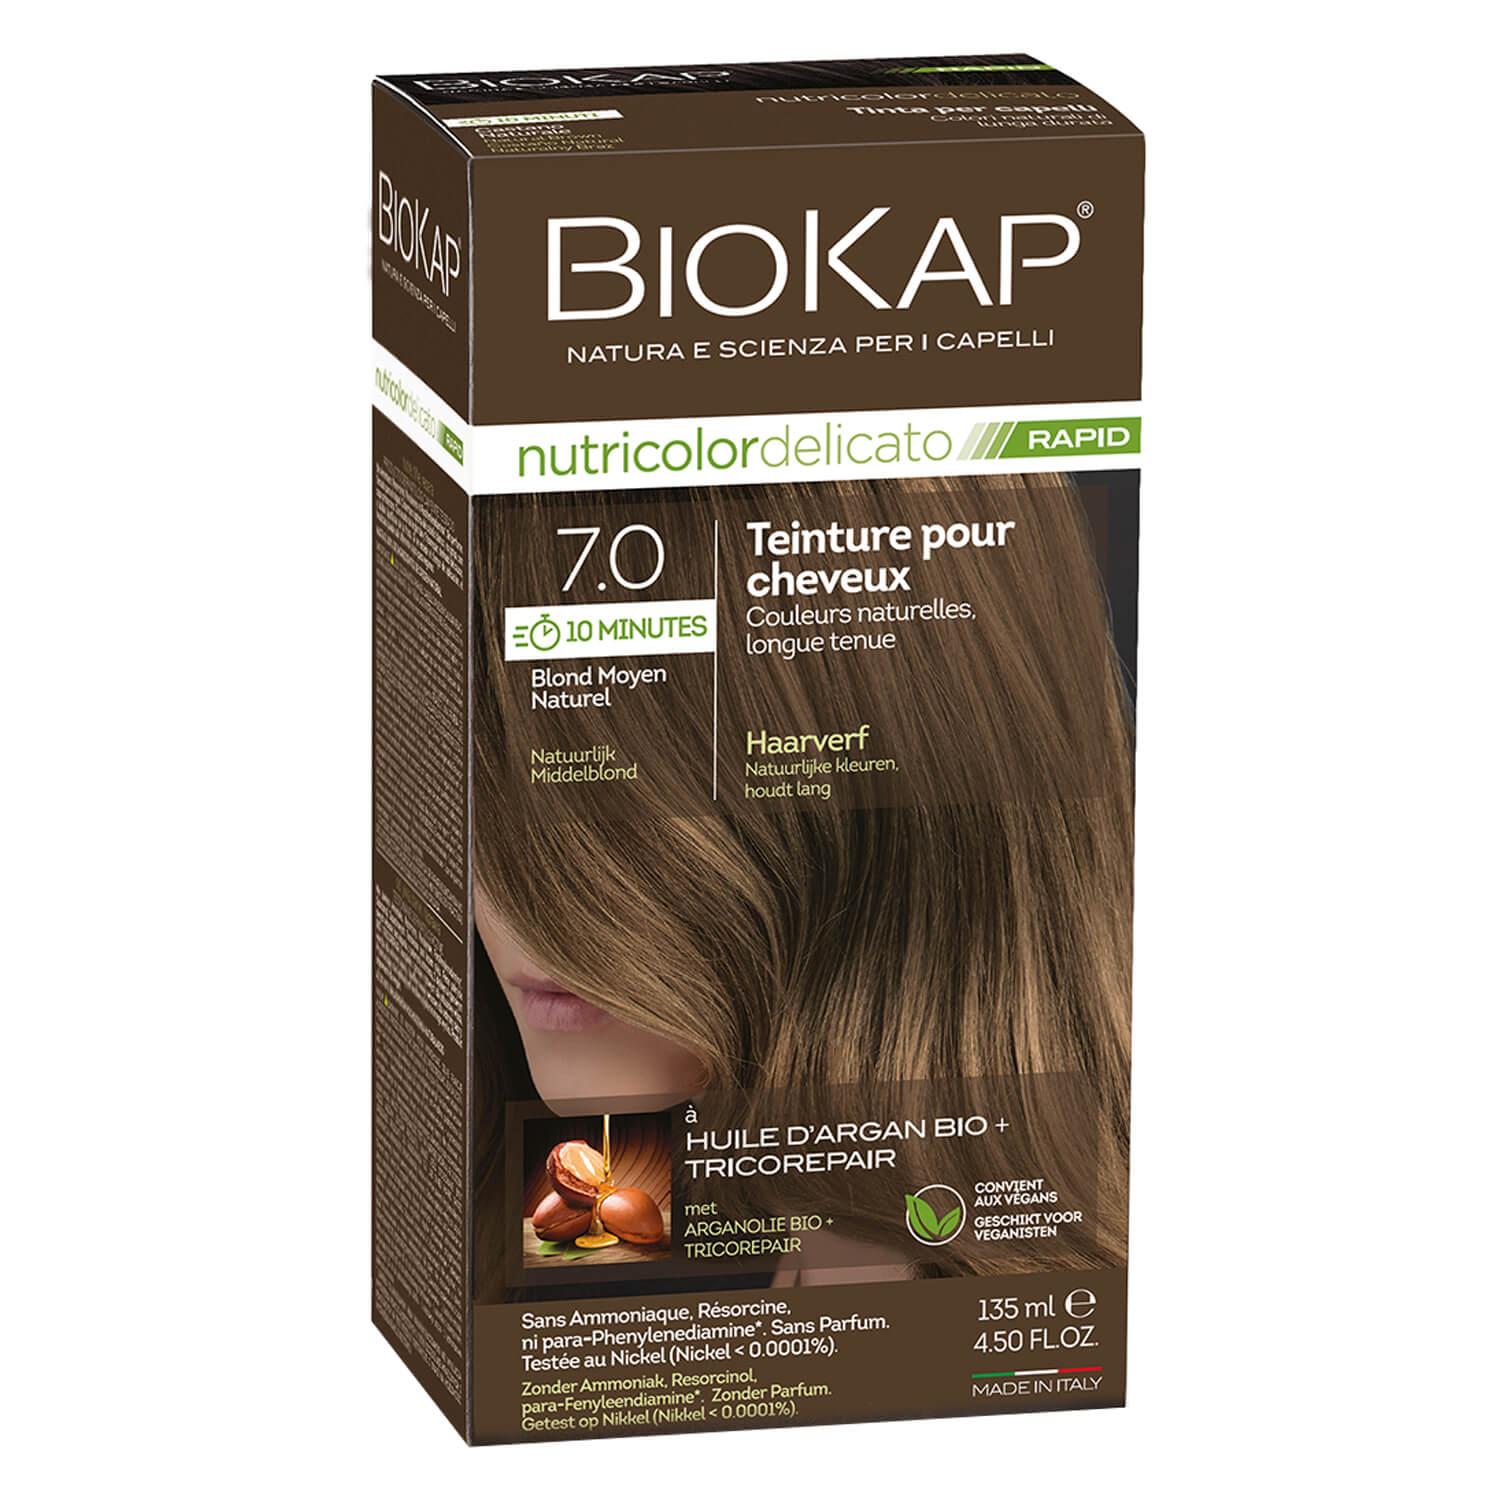 BIOKAP Nutricolor - Teinture Blond Moyen Naturel 7.0